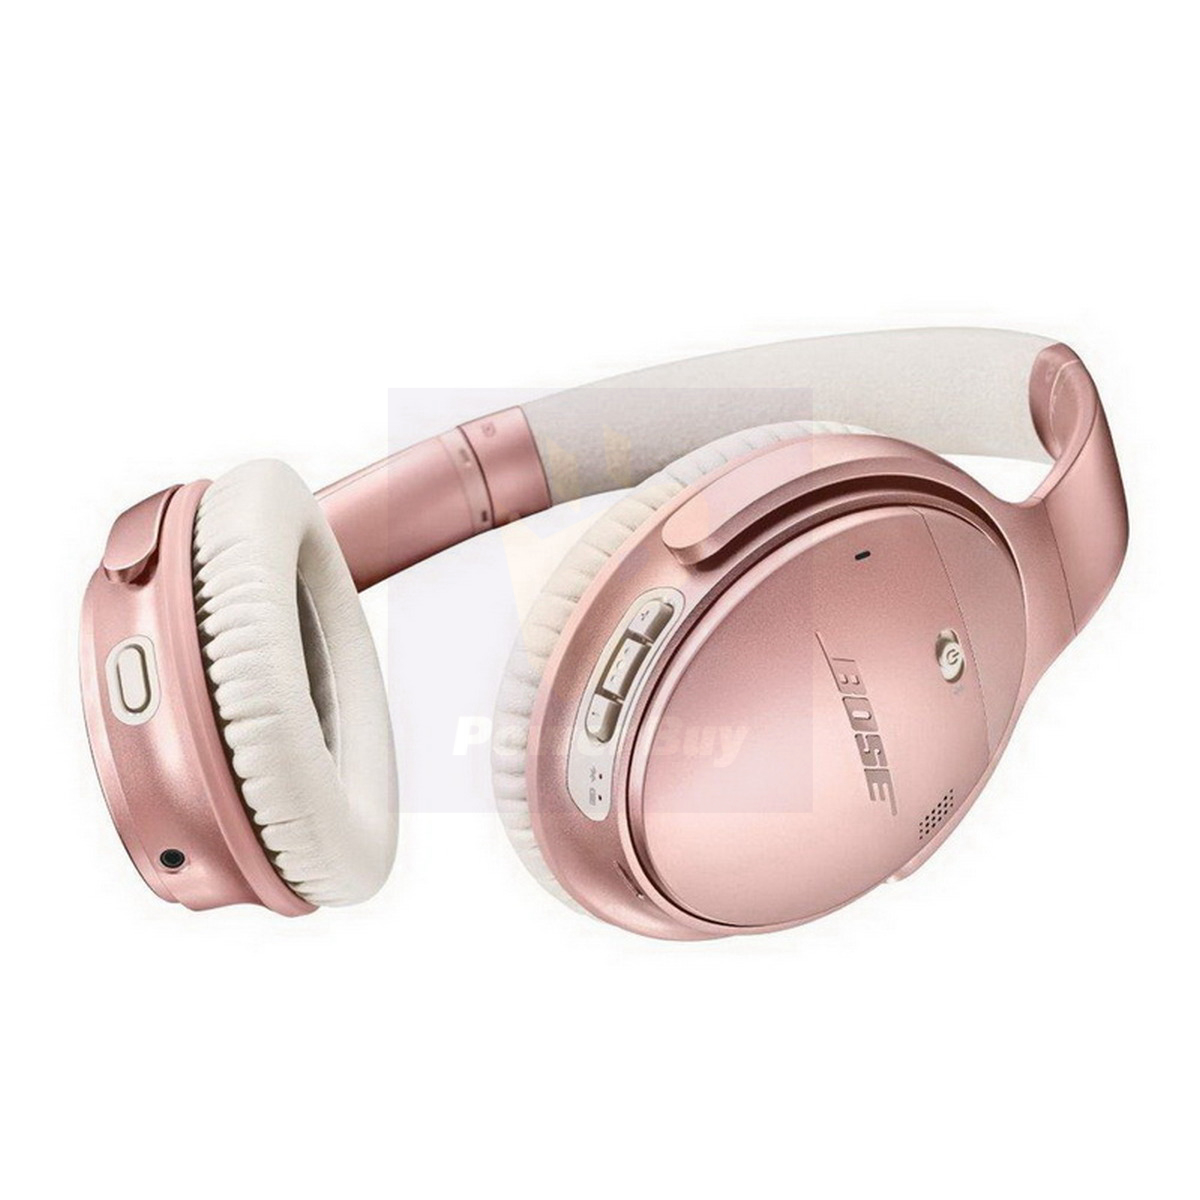 Bose QuietComfort 35 (Series I) Wireless Headphones, Noise